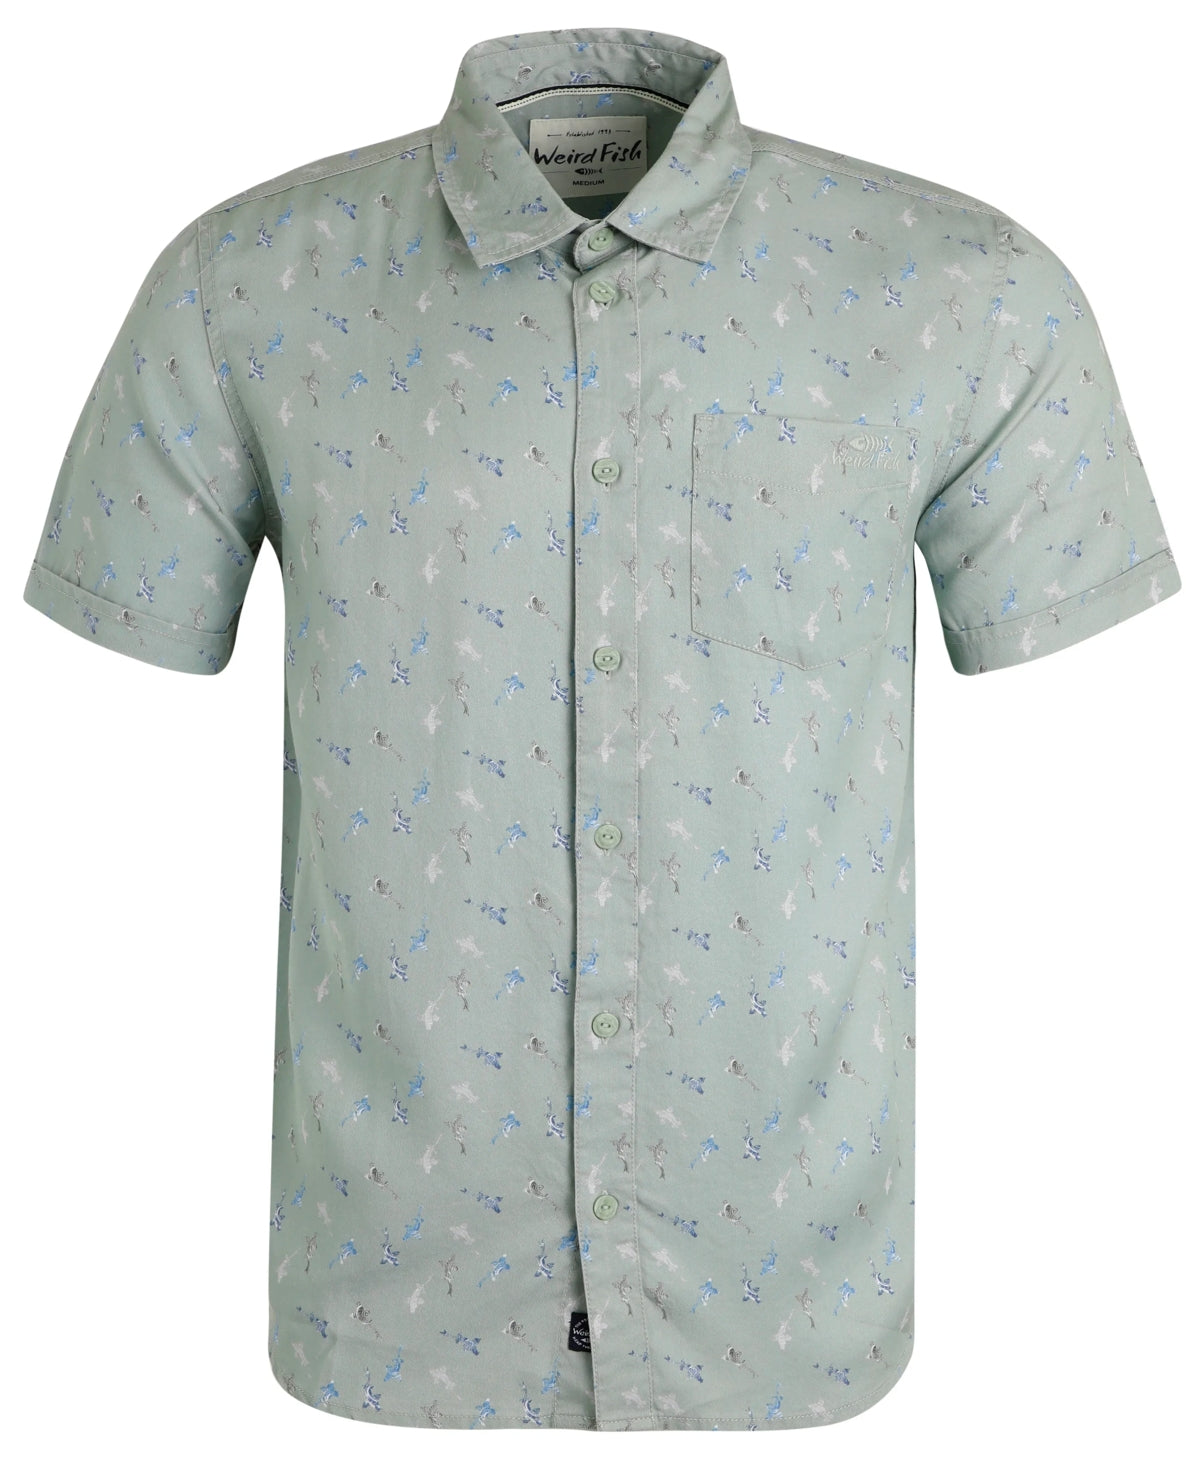 Men's Keilor fish print short sleeve shirt from Weird Fish in pistachio green.